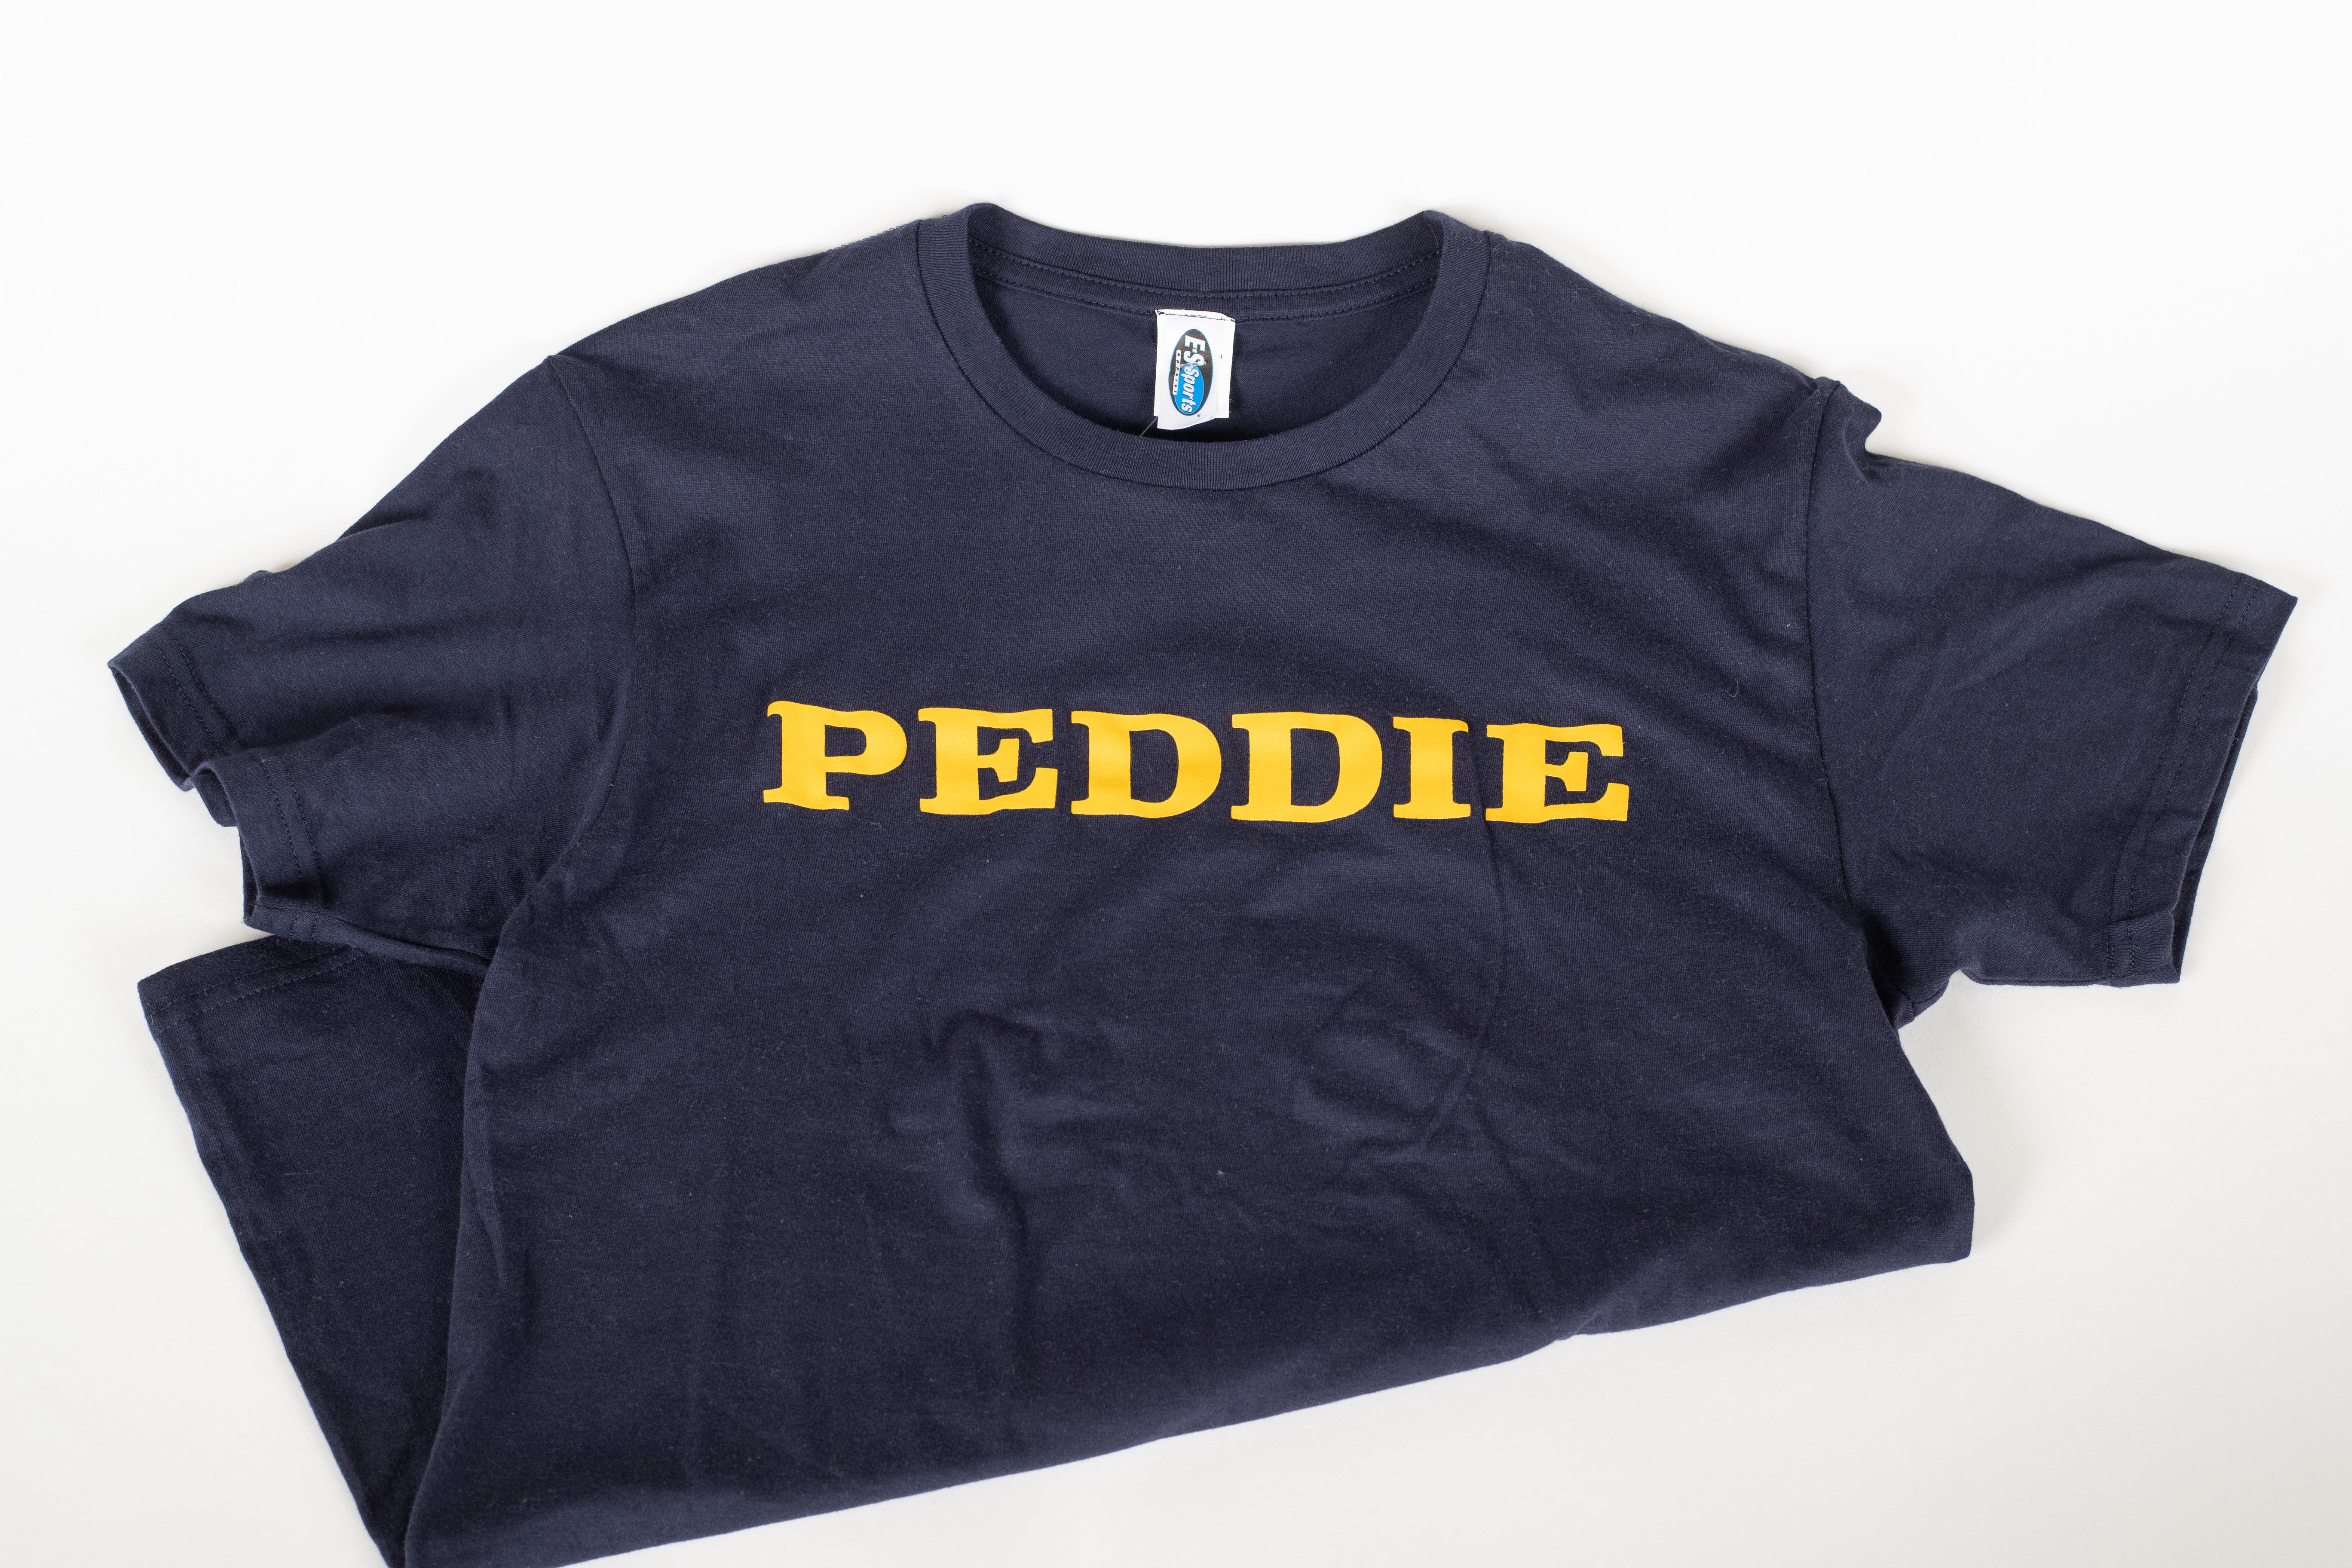 Peddie Tee Shirt